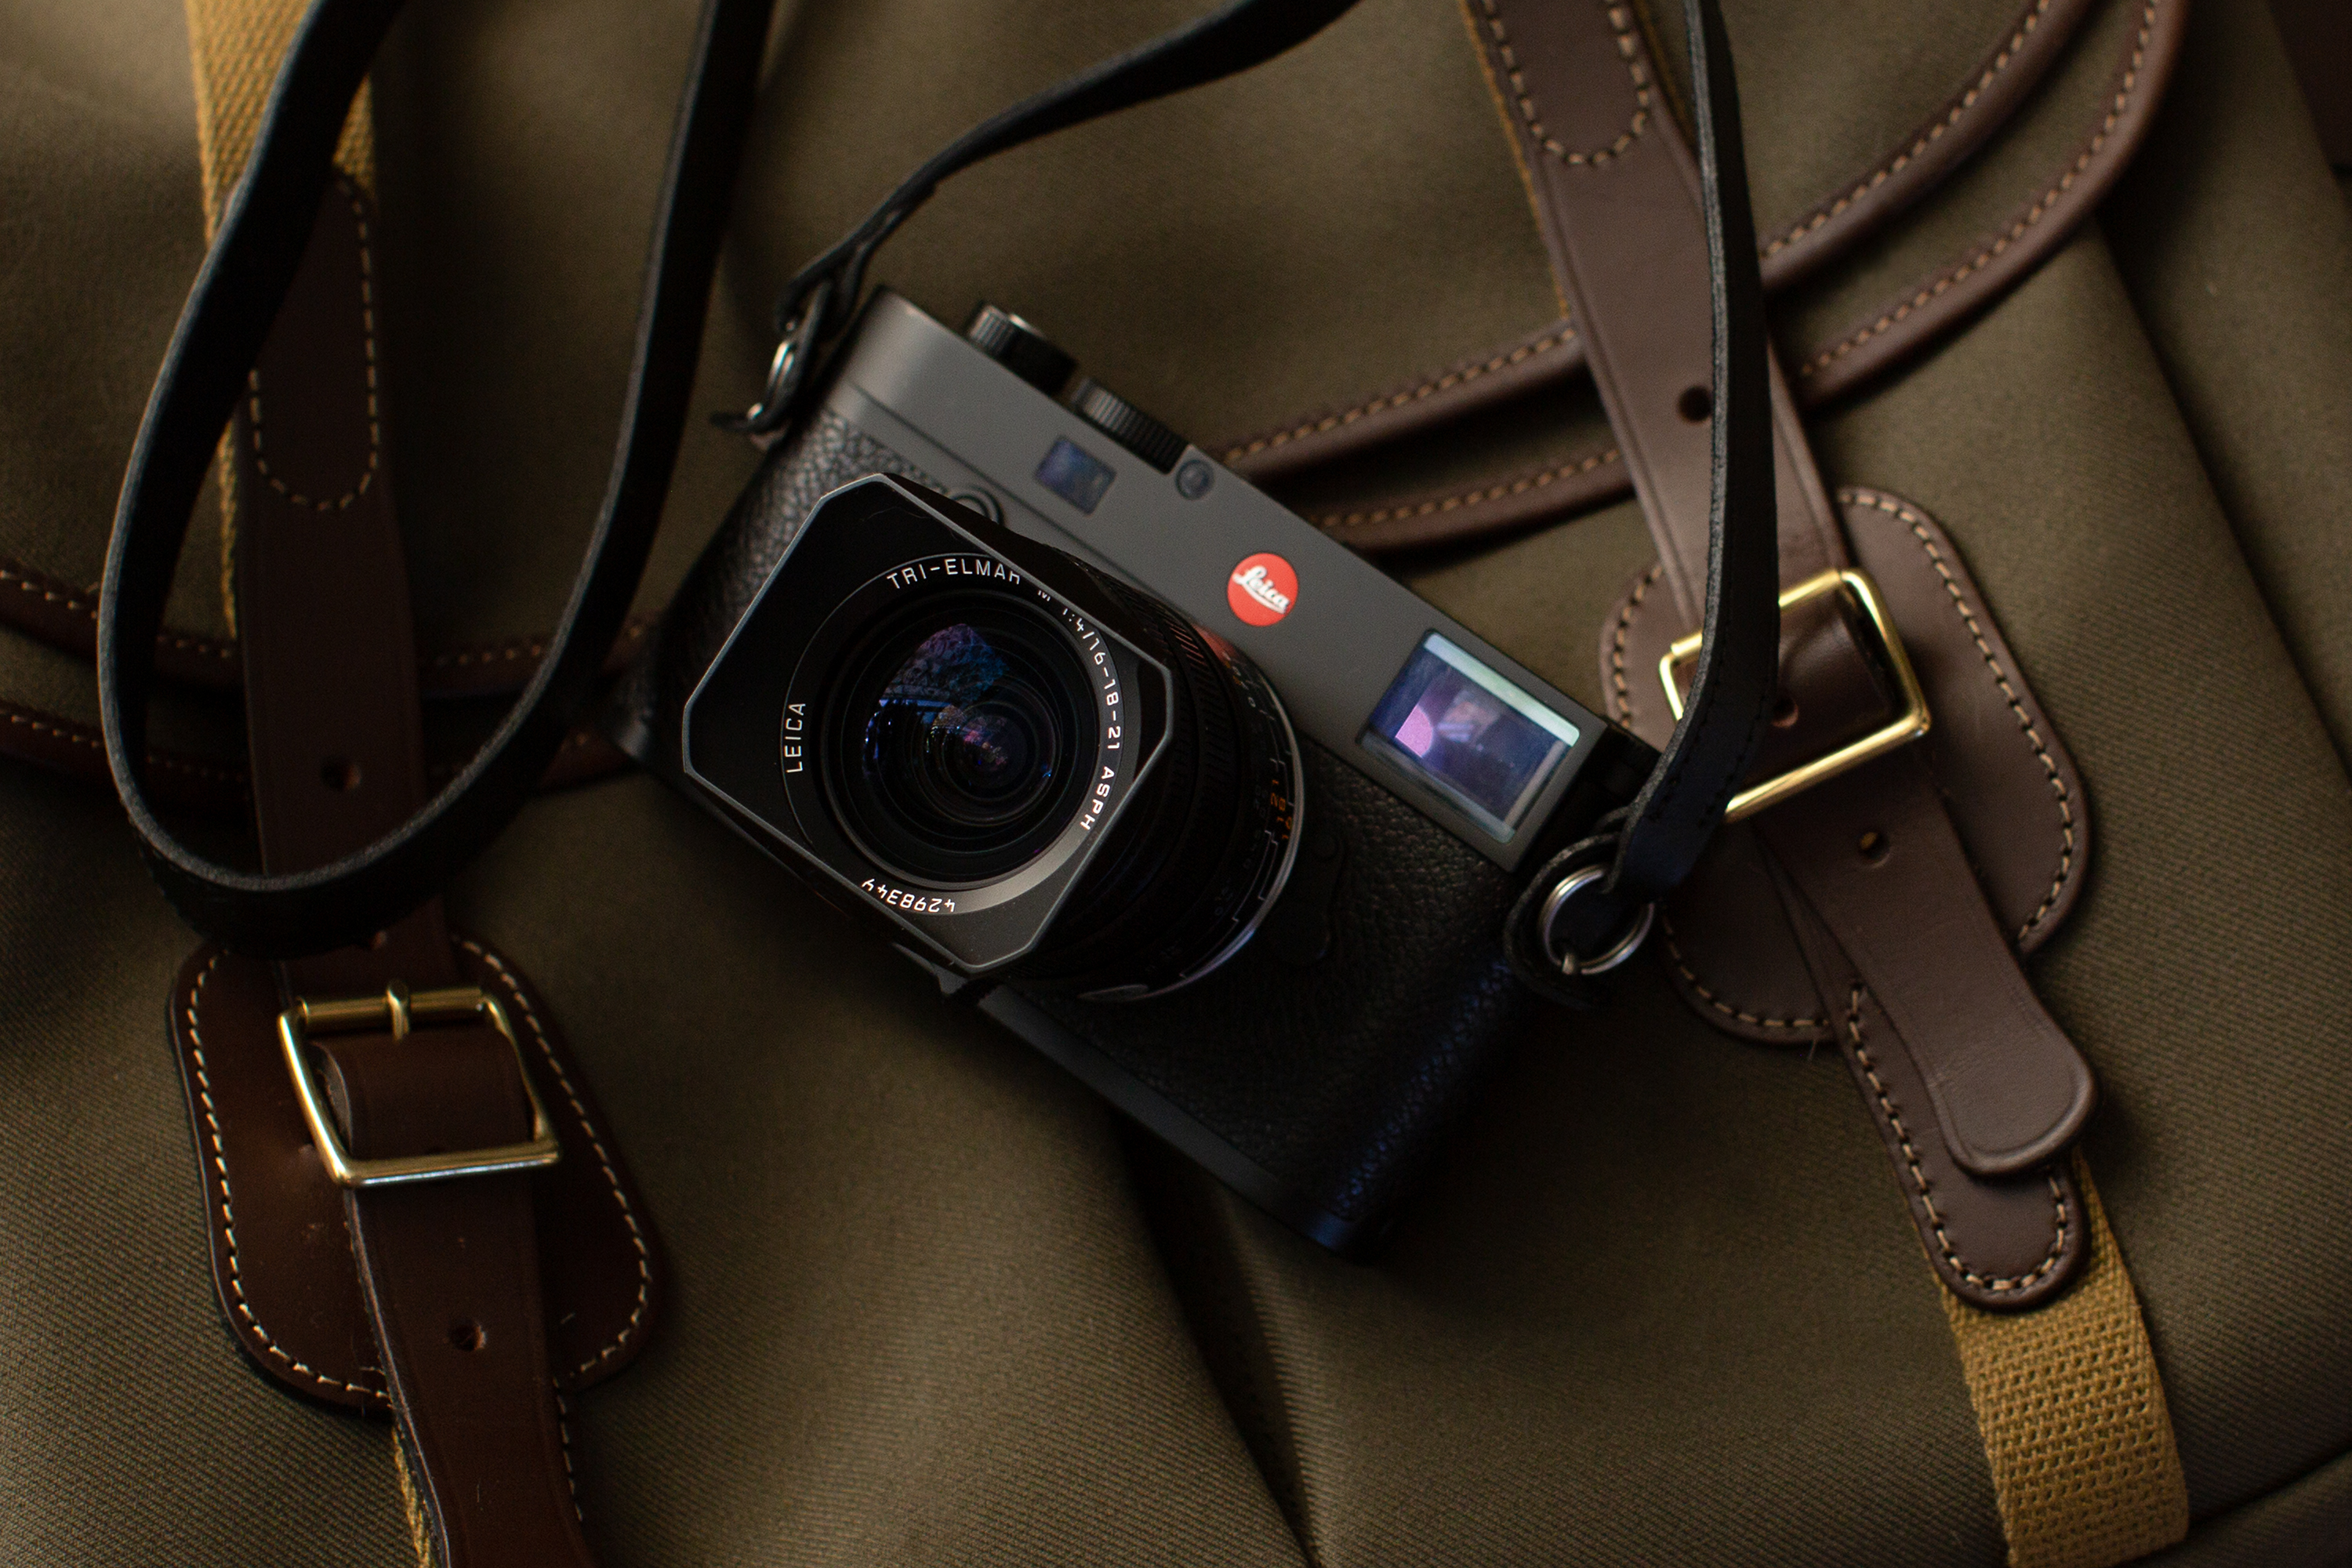 The Most Unique Lens? Leica 16-18-21mm Tri-Elmar F4 Review